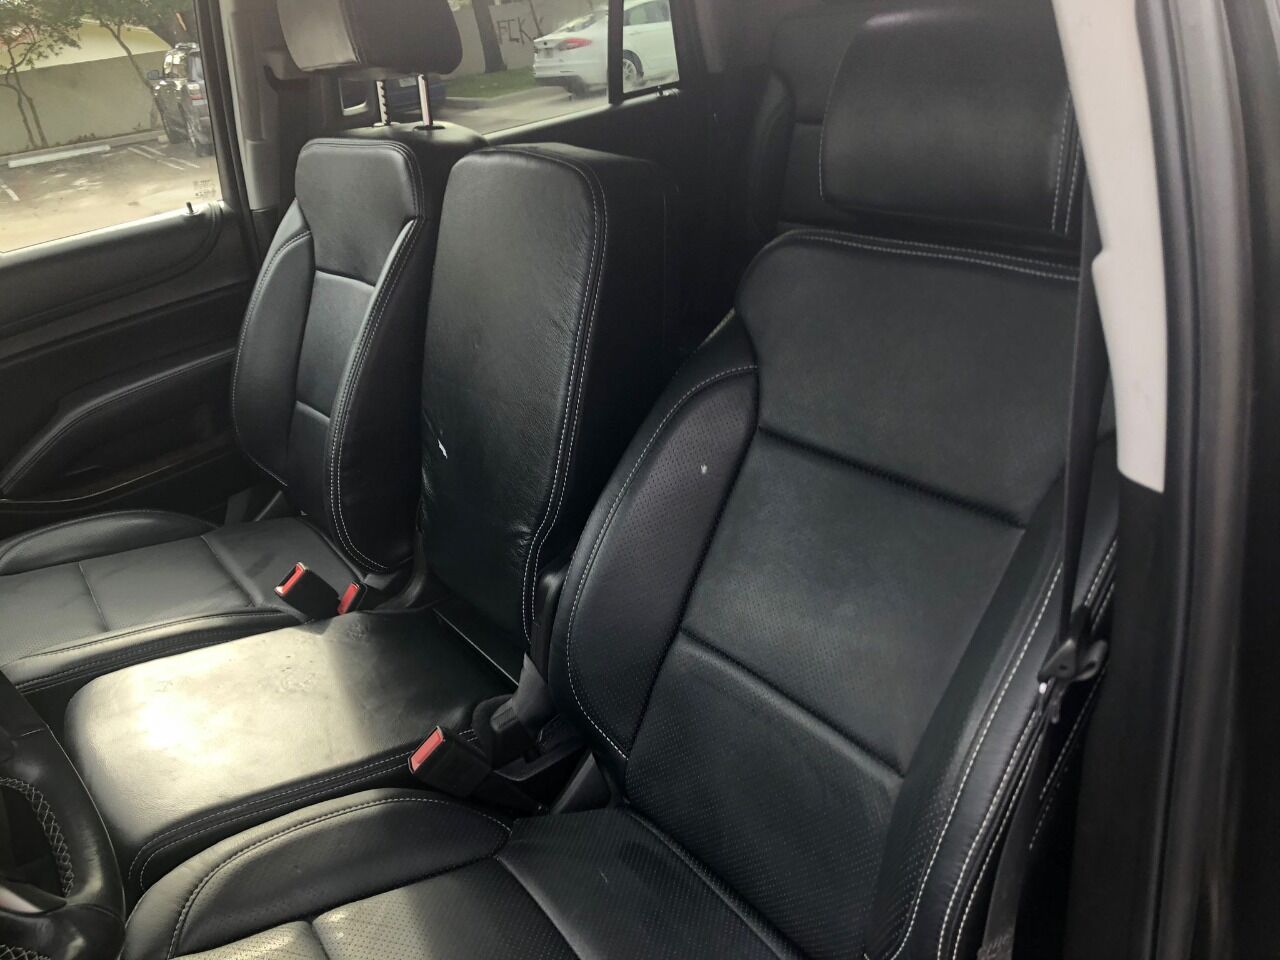 2019 Chevrolet Tahoe SUV - $32,500